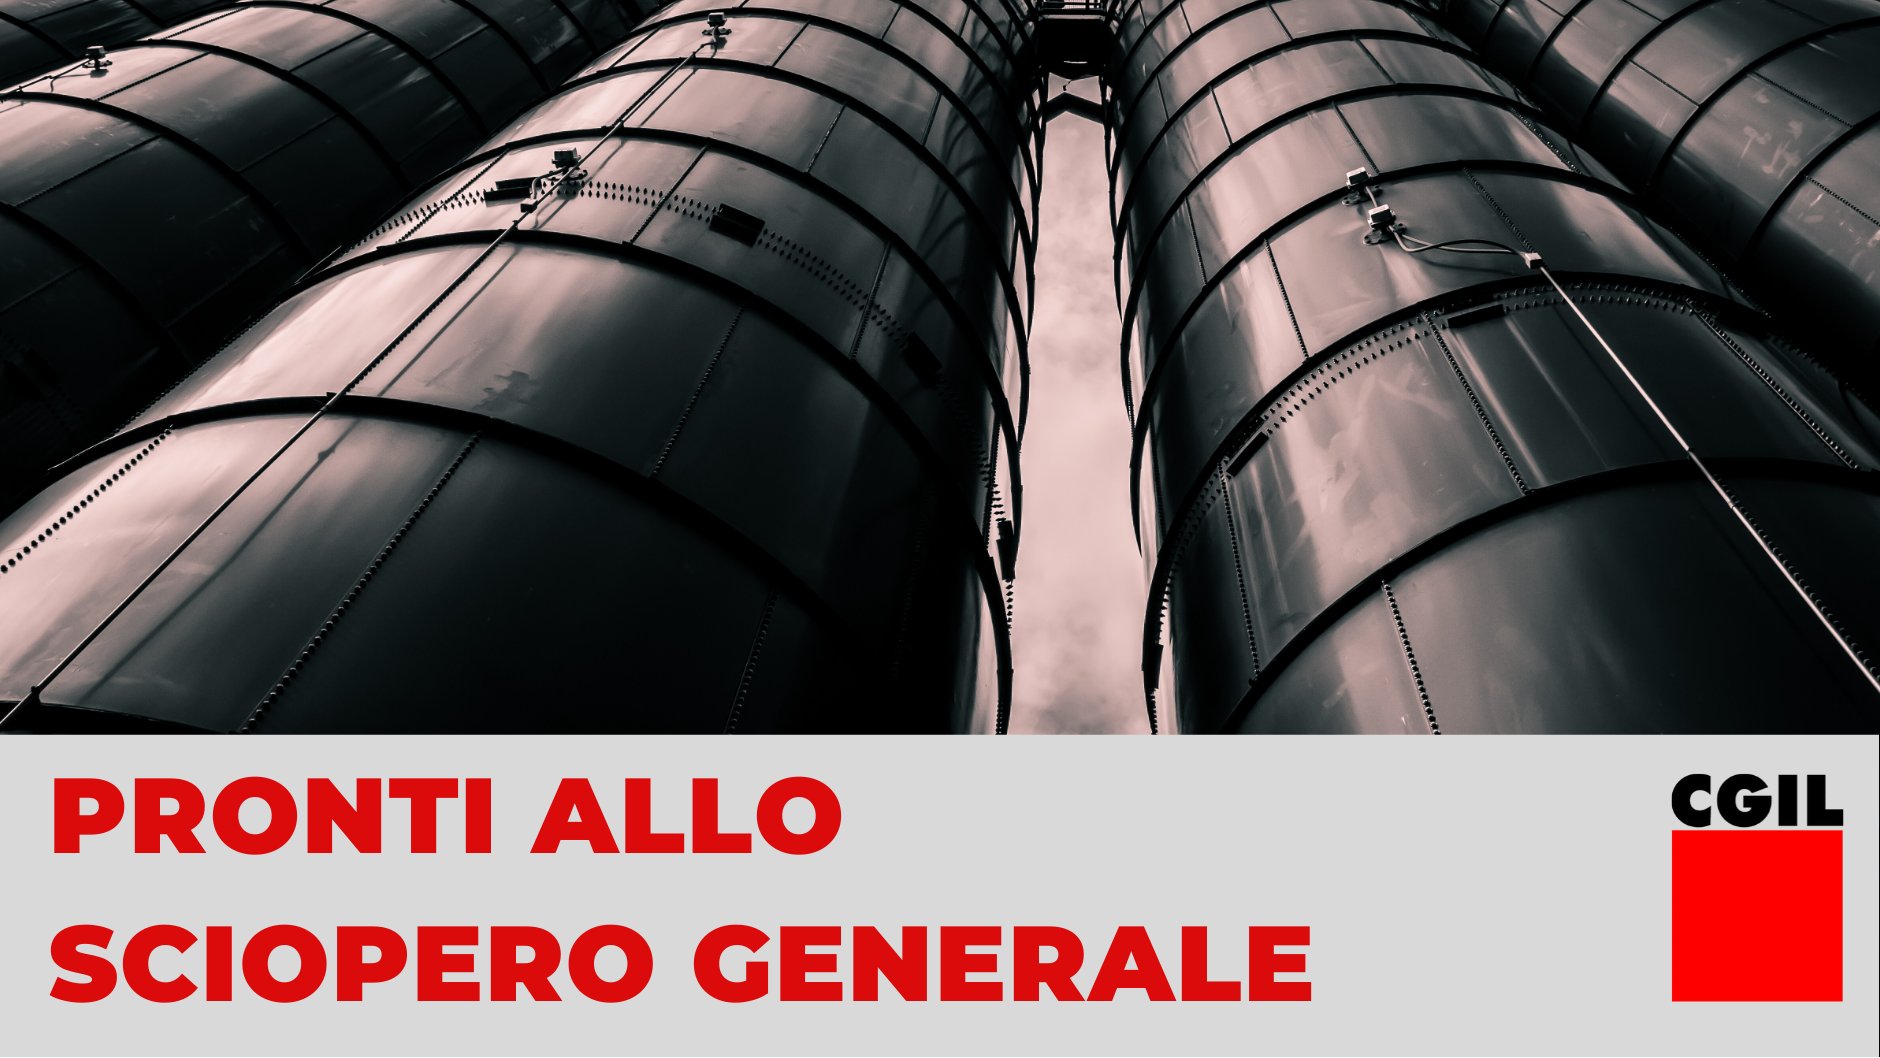 Italy general strike Image CGIL